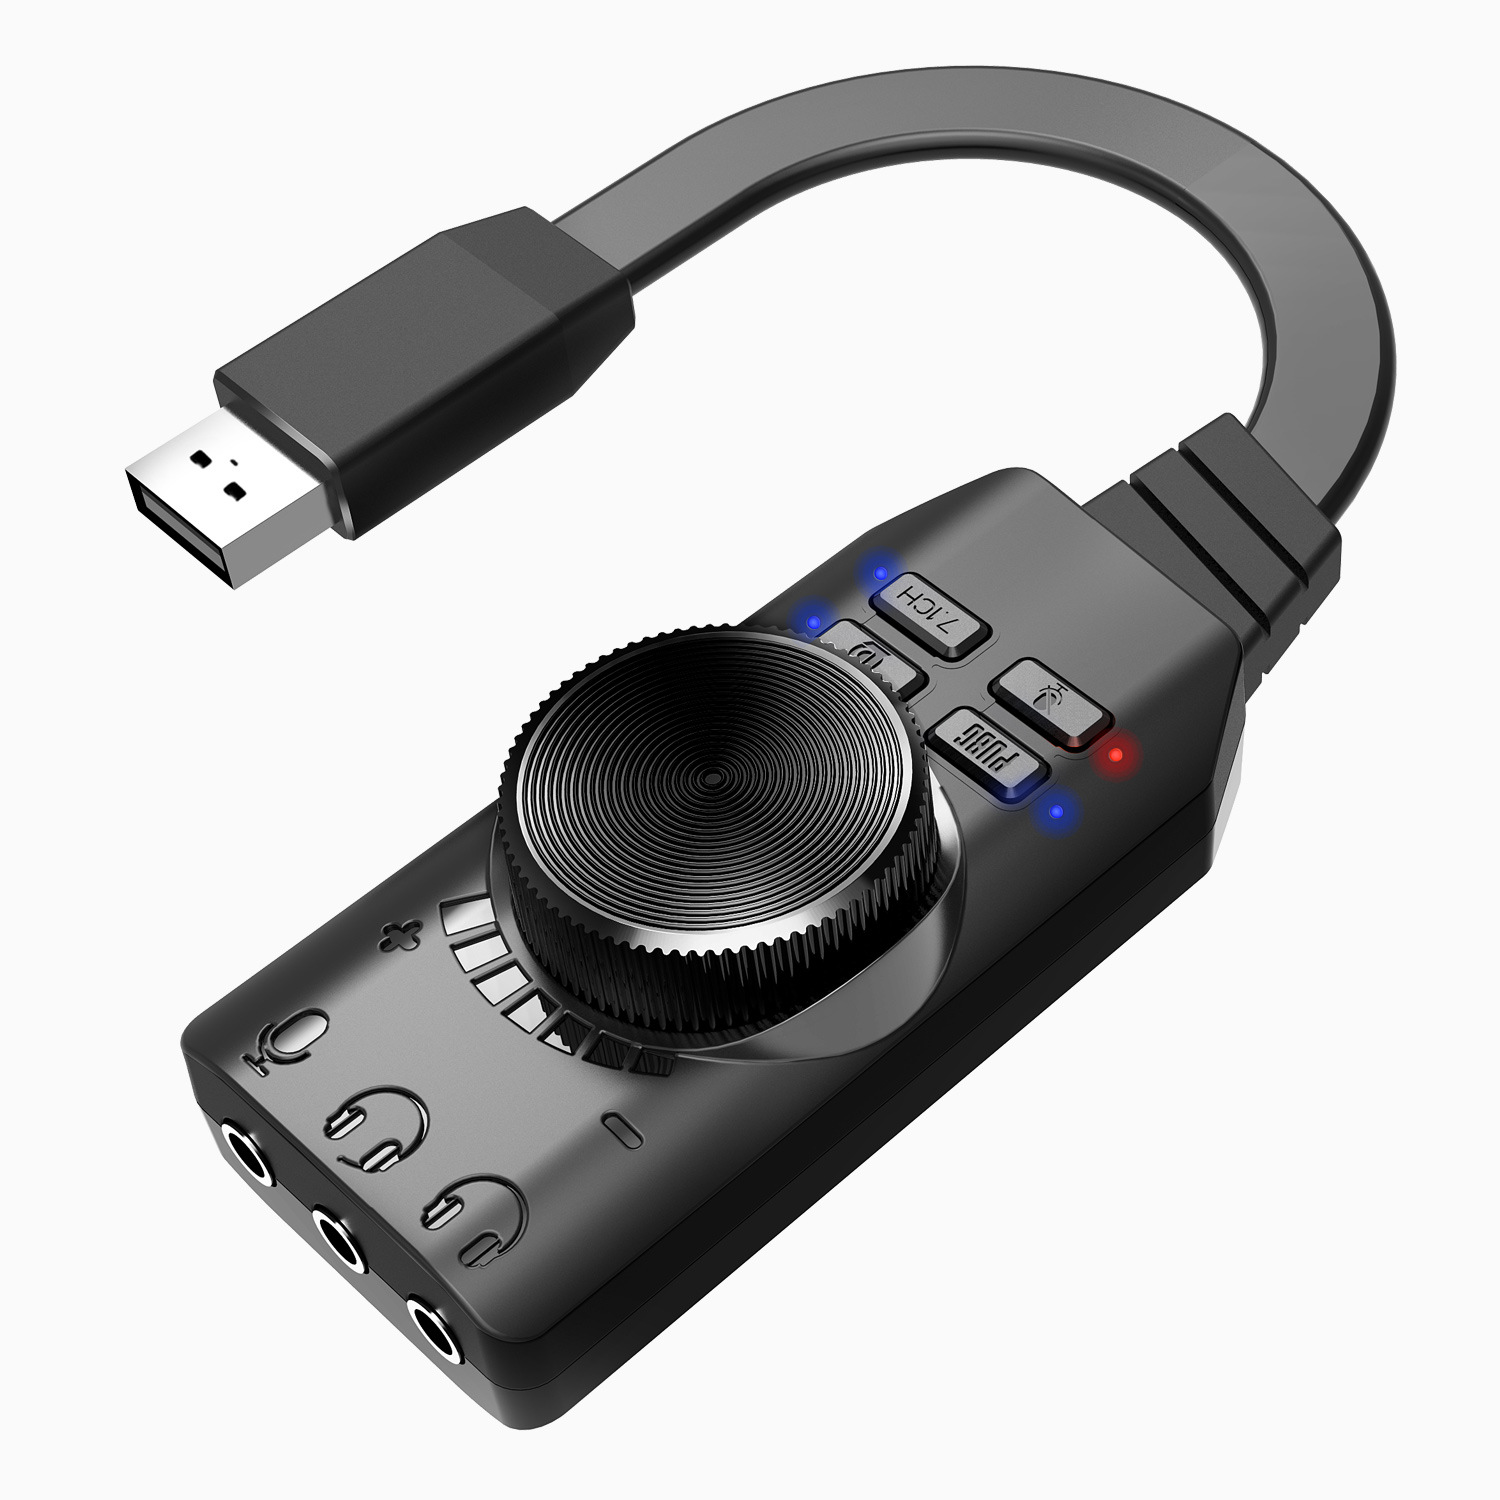 und - BRIGHTAKE Soundkarte, Externe Soundkarte USB Soundkarte/USB-Soundkarte Externe Gaming Computer Handy